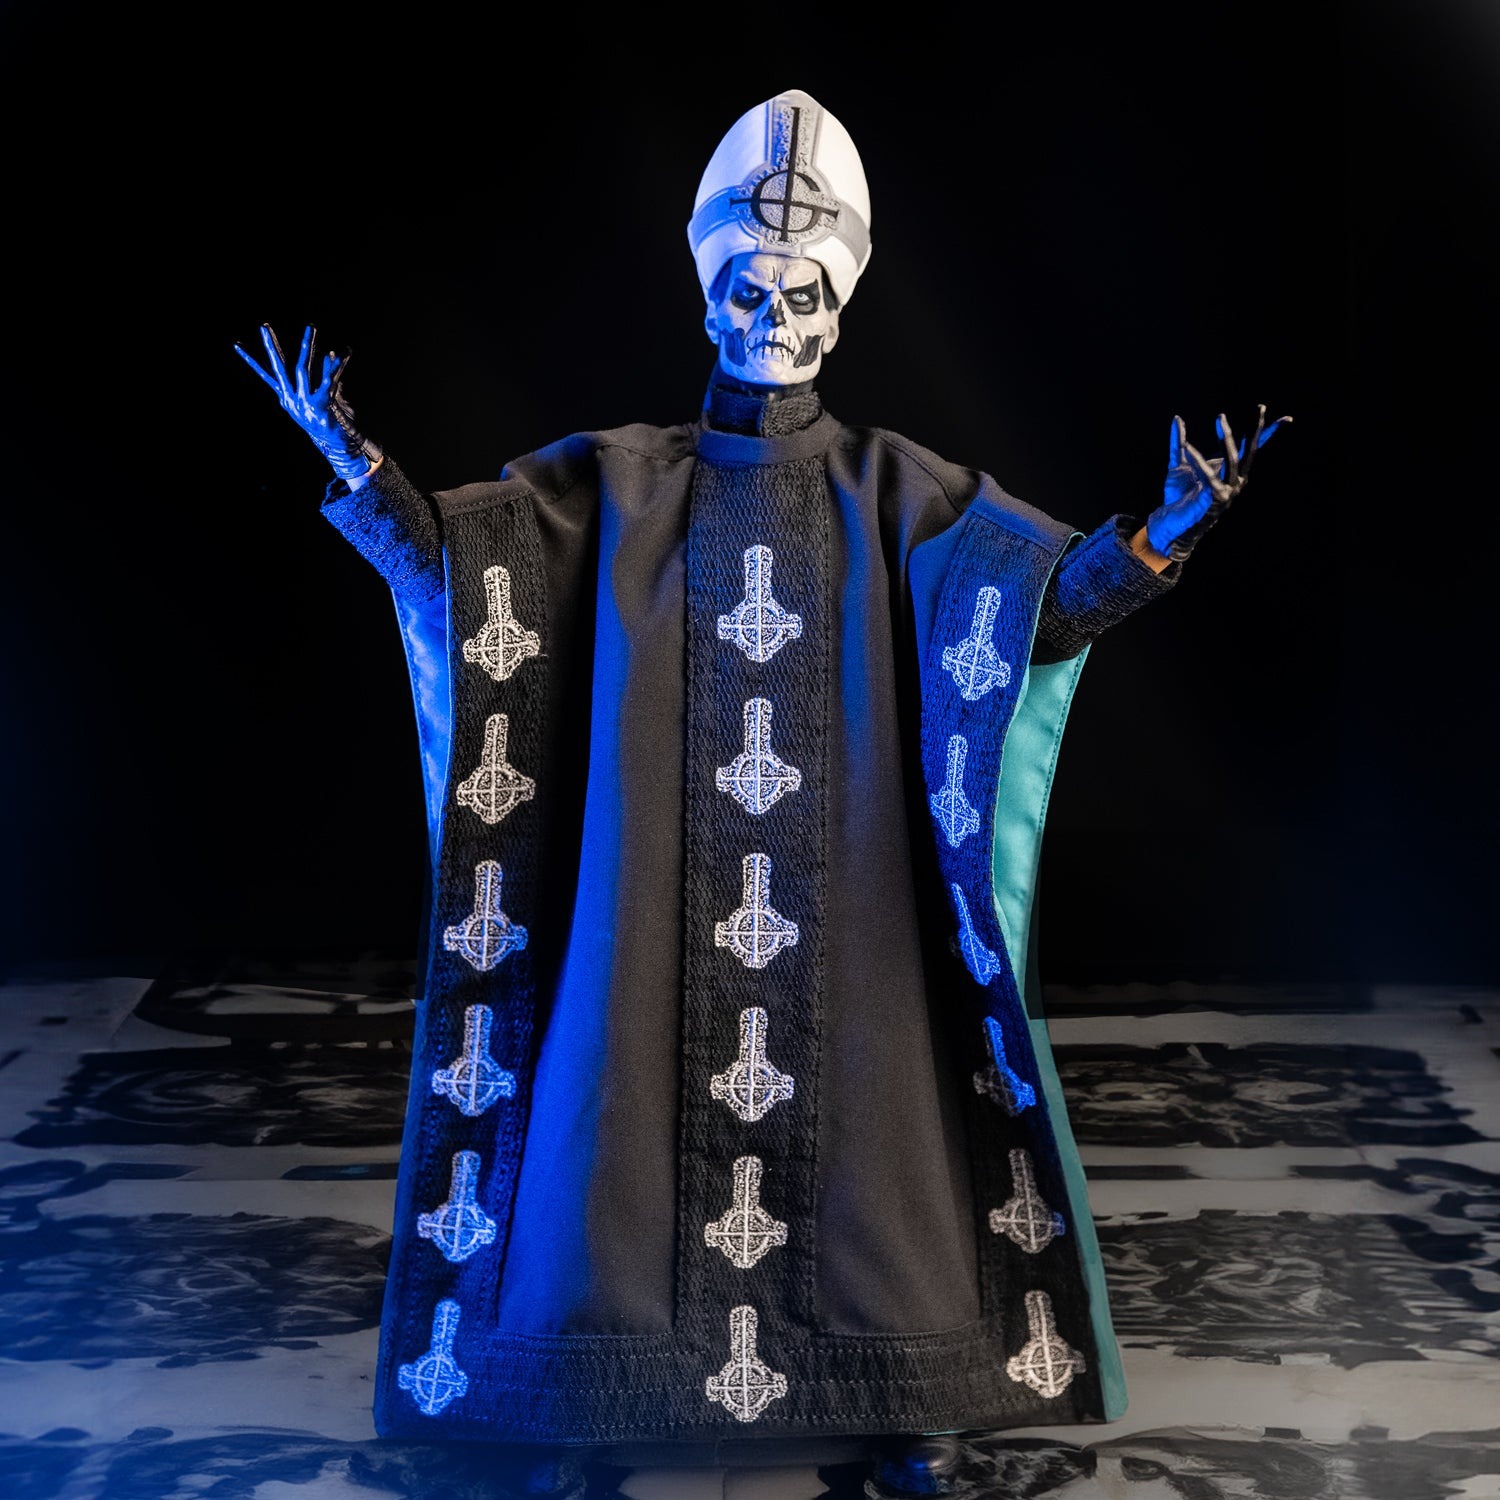 Pre-Order Trick or Treat Studios Ghost Papa Emeritus II Sixth Scale Figure